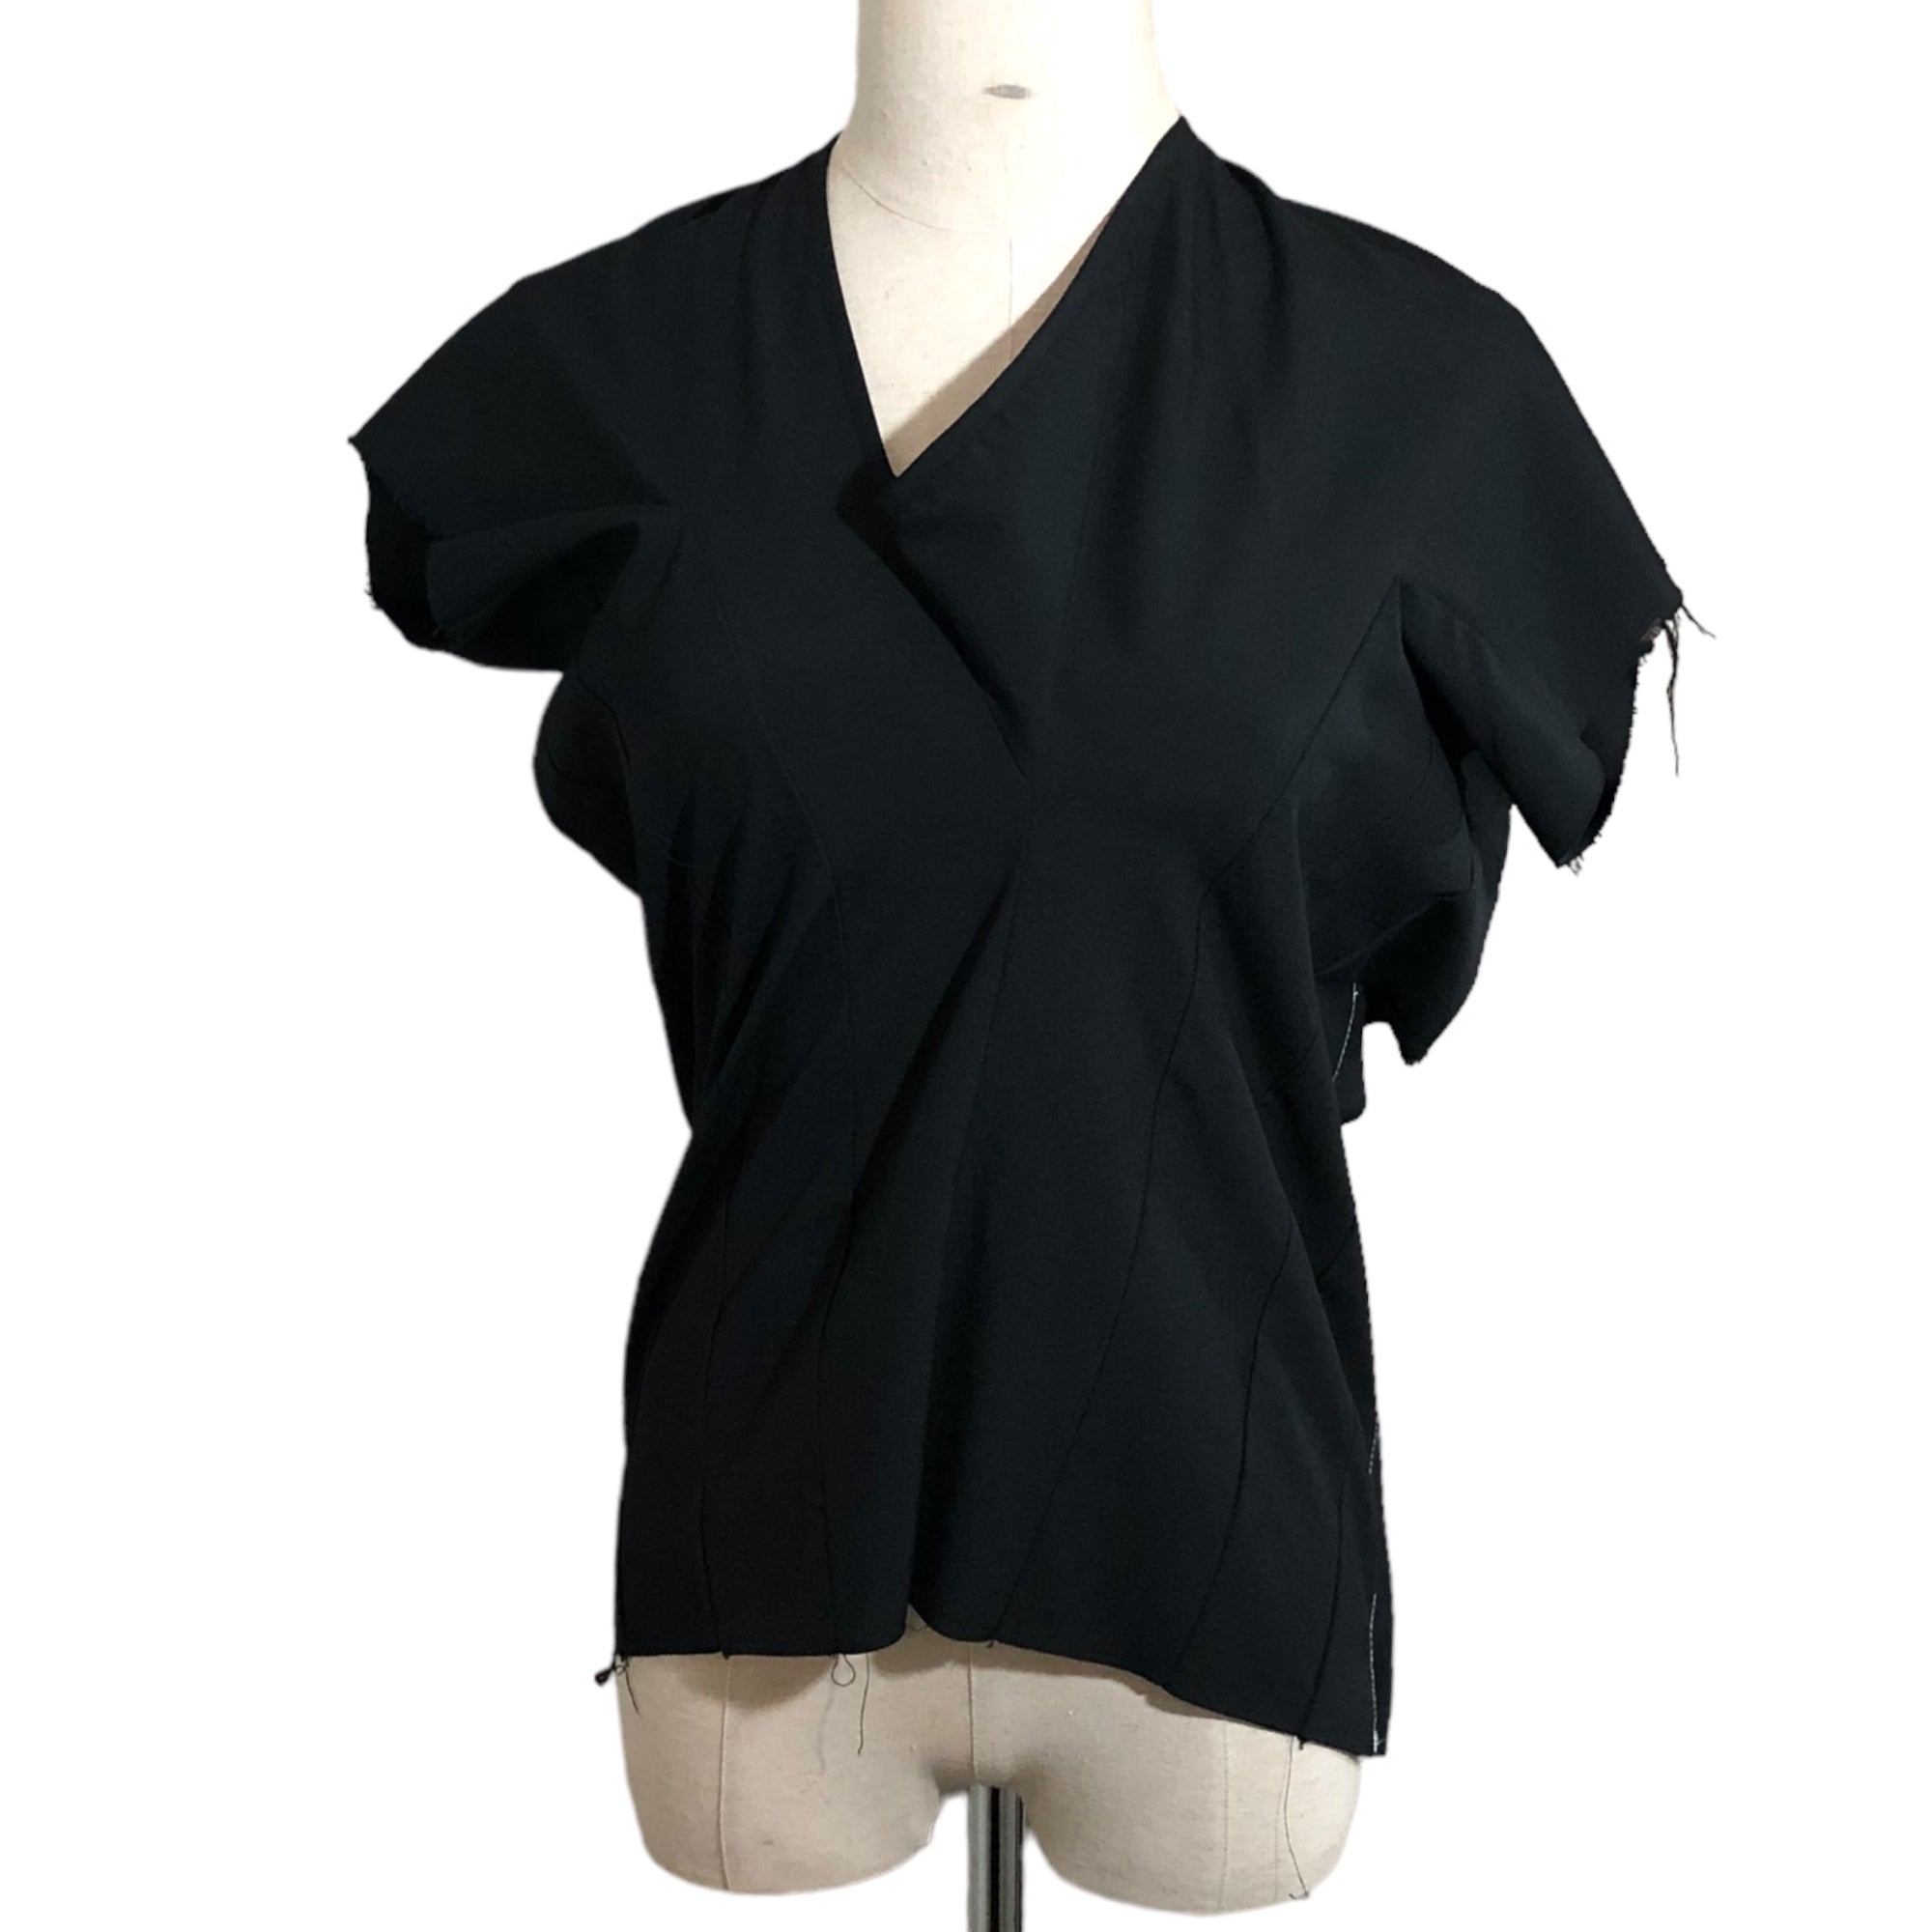 COMME des GARCONS(コムデギャルソン) 90's A blouse that expresses a twist 捻じれを表現したブラウス 90年代 GB-100340 FREE ブラック AD1997 サイドジップ 稀少アイテム